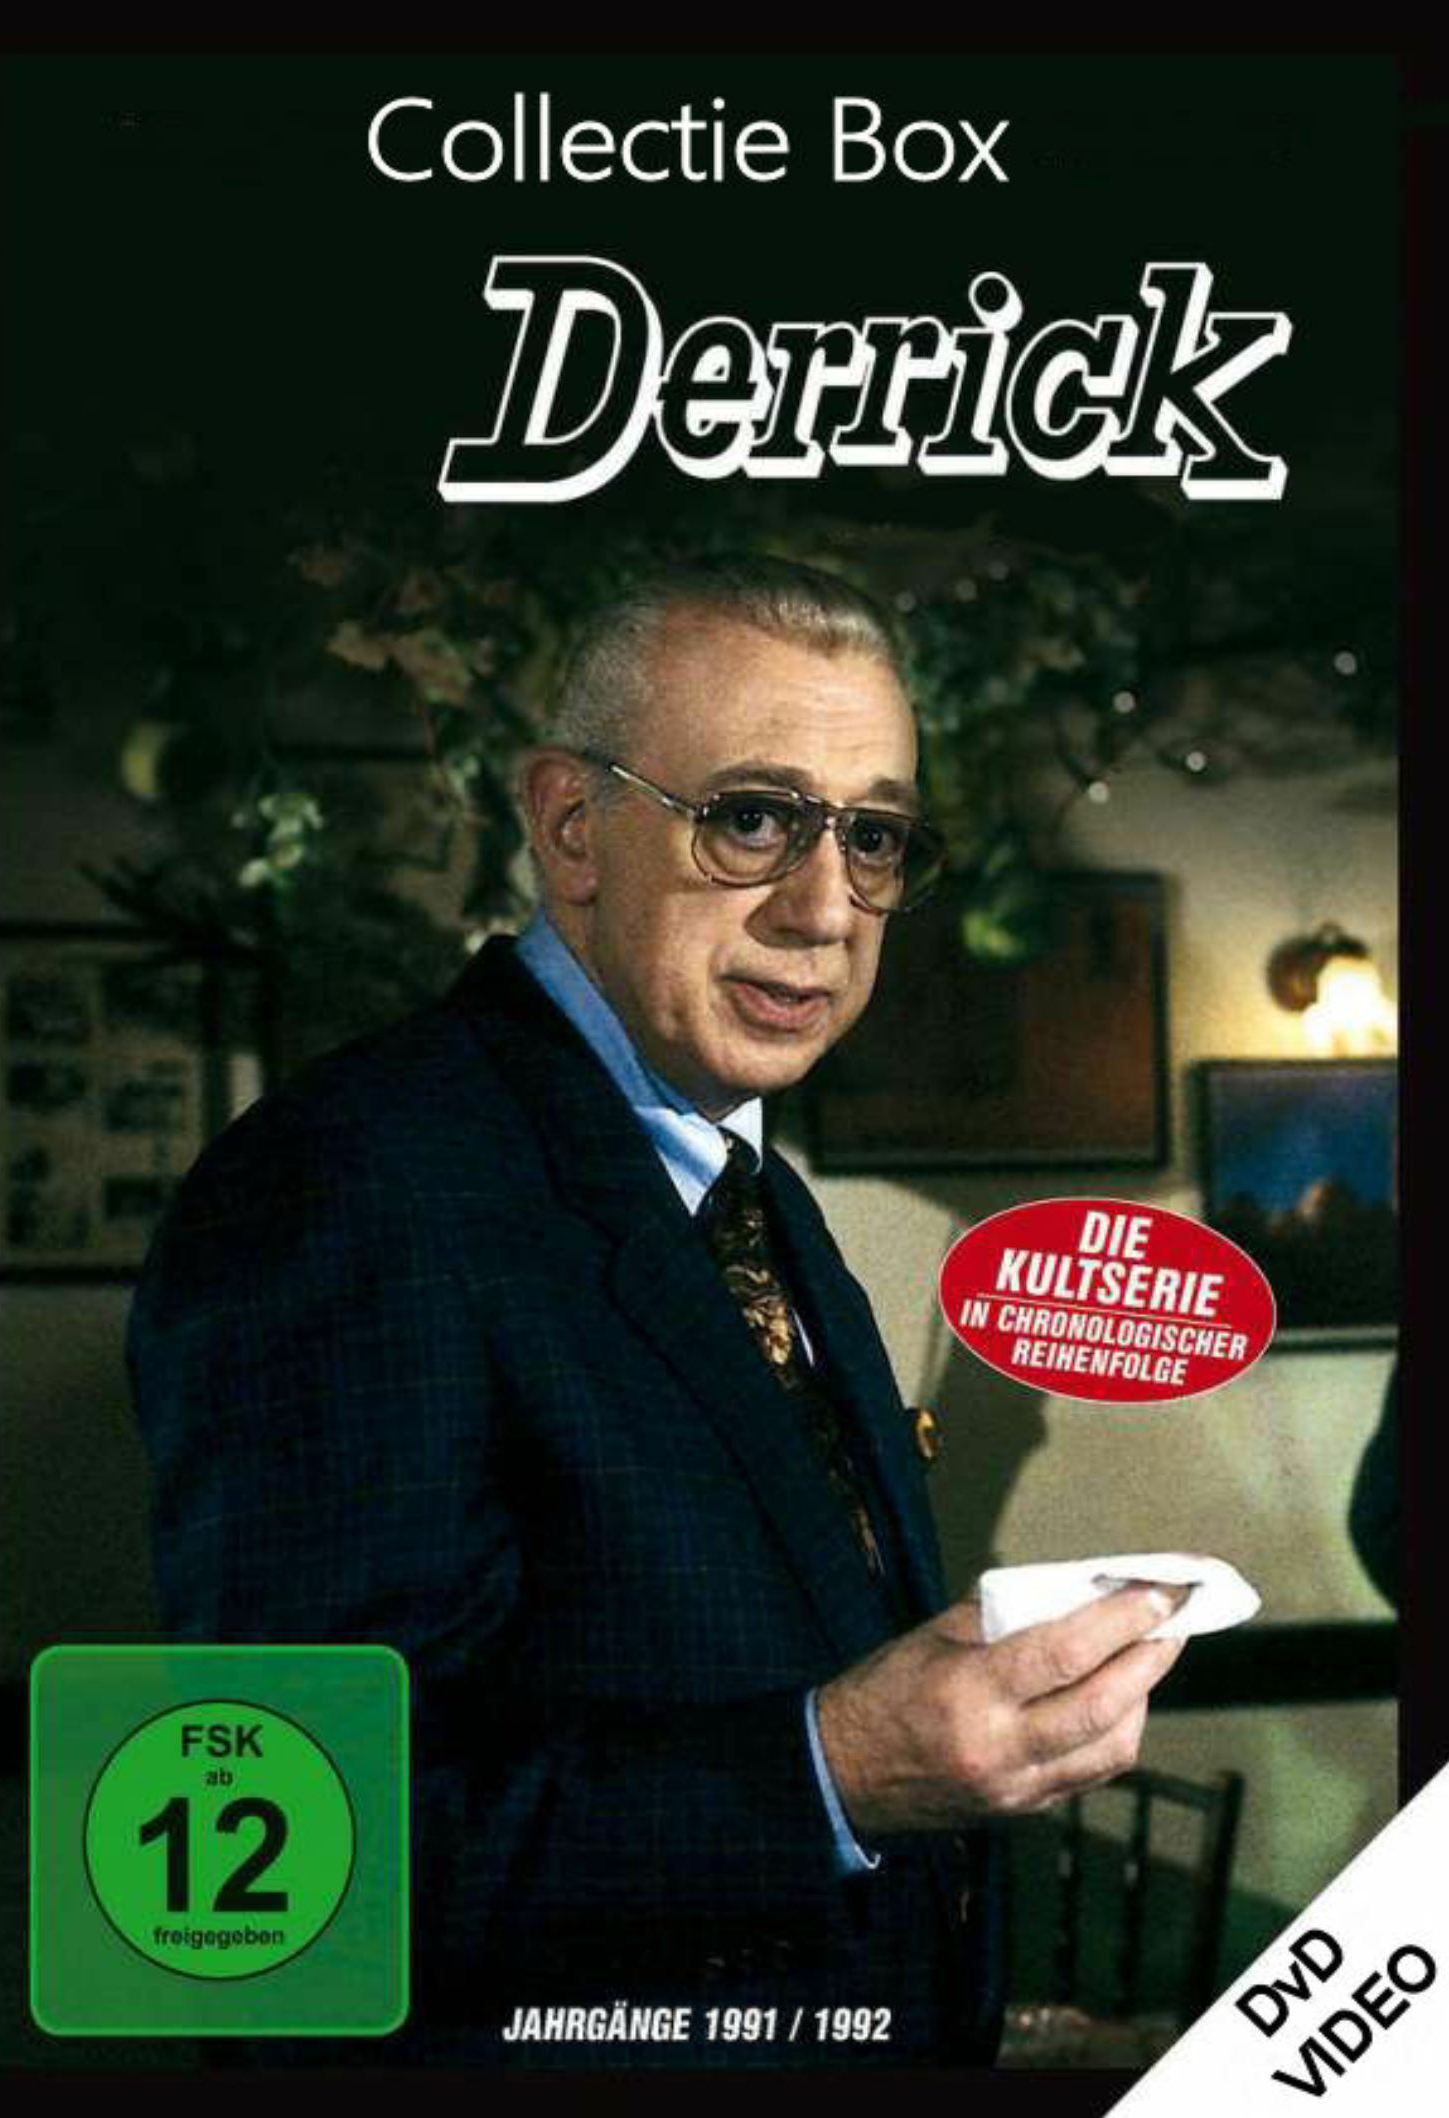 Derrick Collectie - DvD 2 NL subs